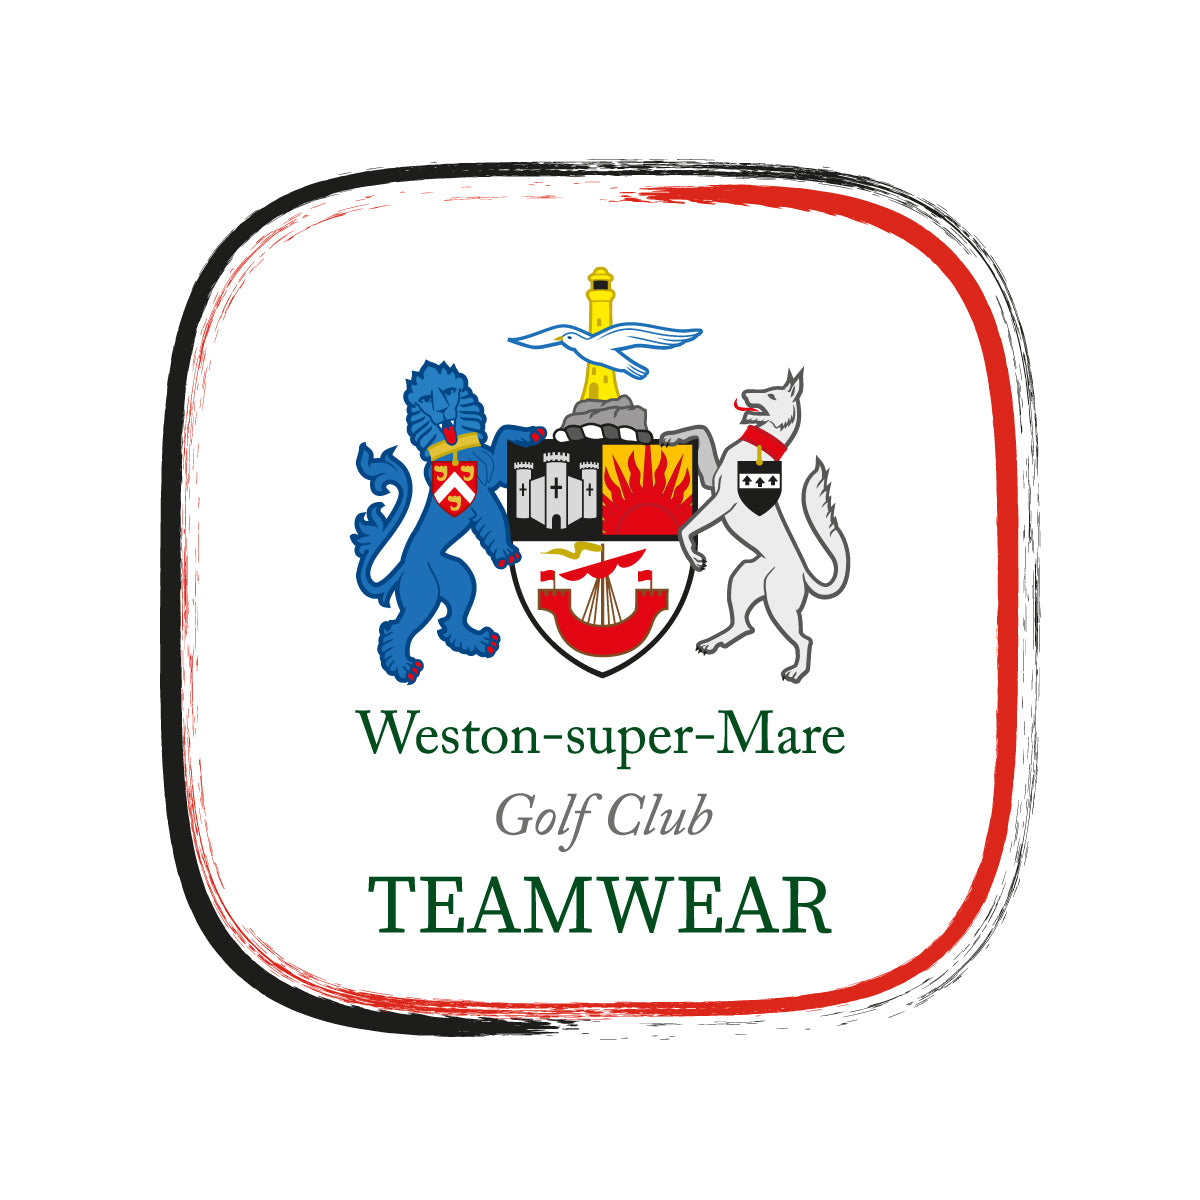 Weston-super-Mare Golf Club Teamwear